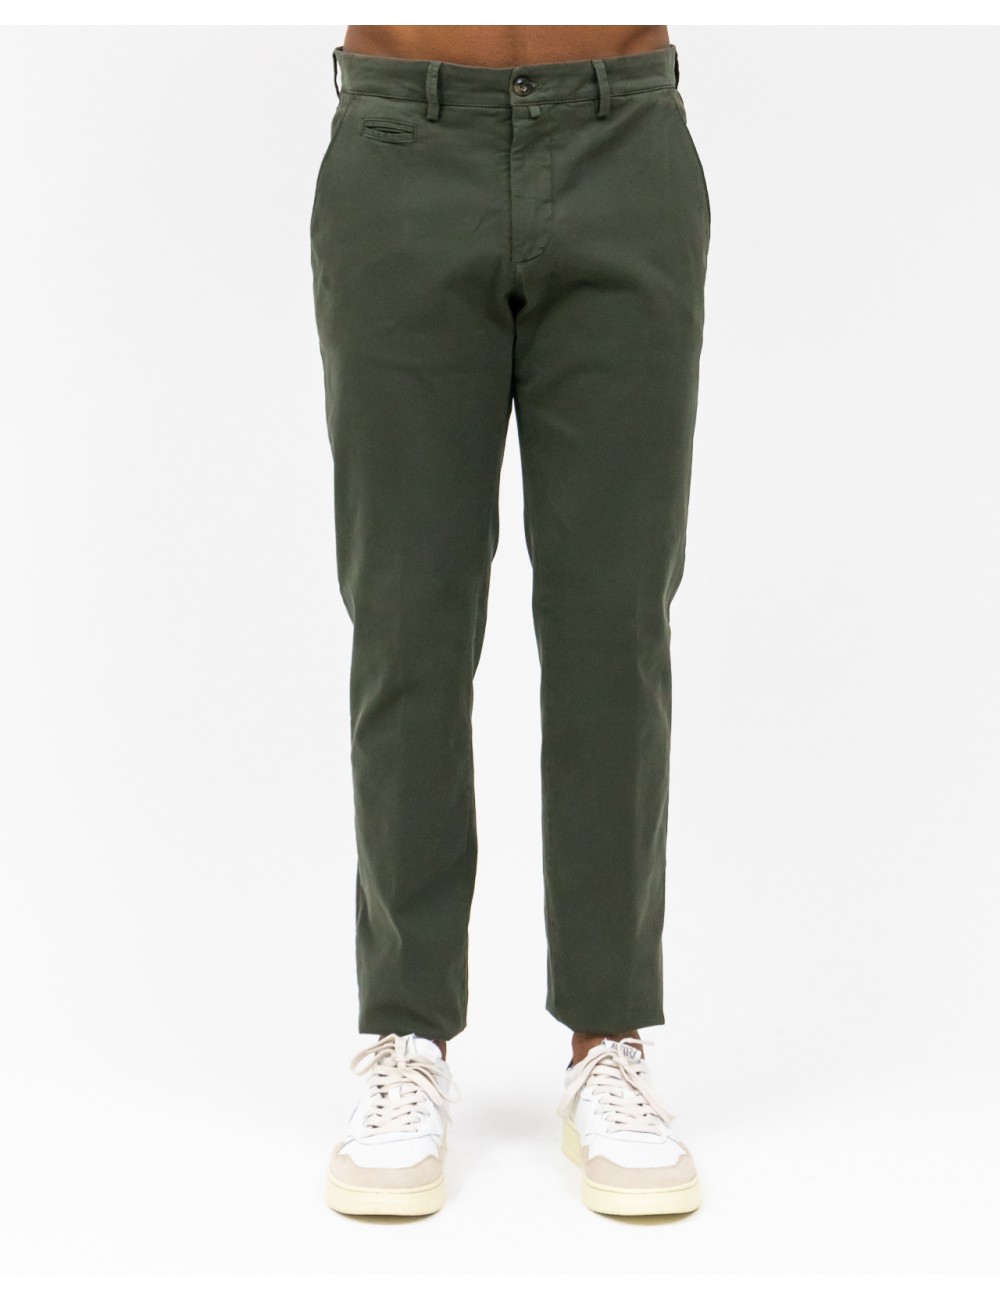 Briglia - Pantalone Verde Uomo BG05 422008 00072 I22